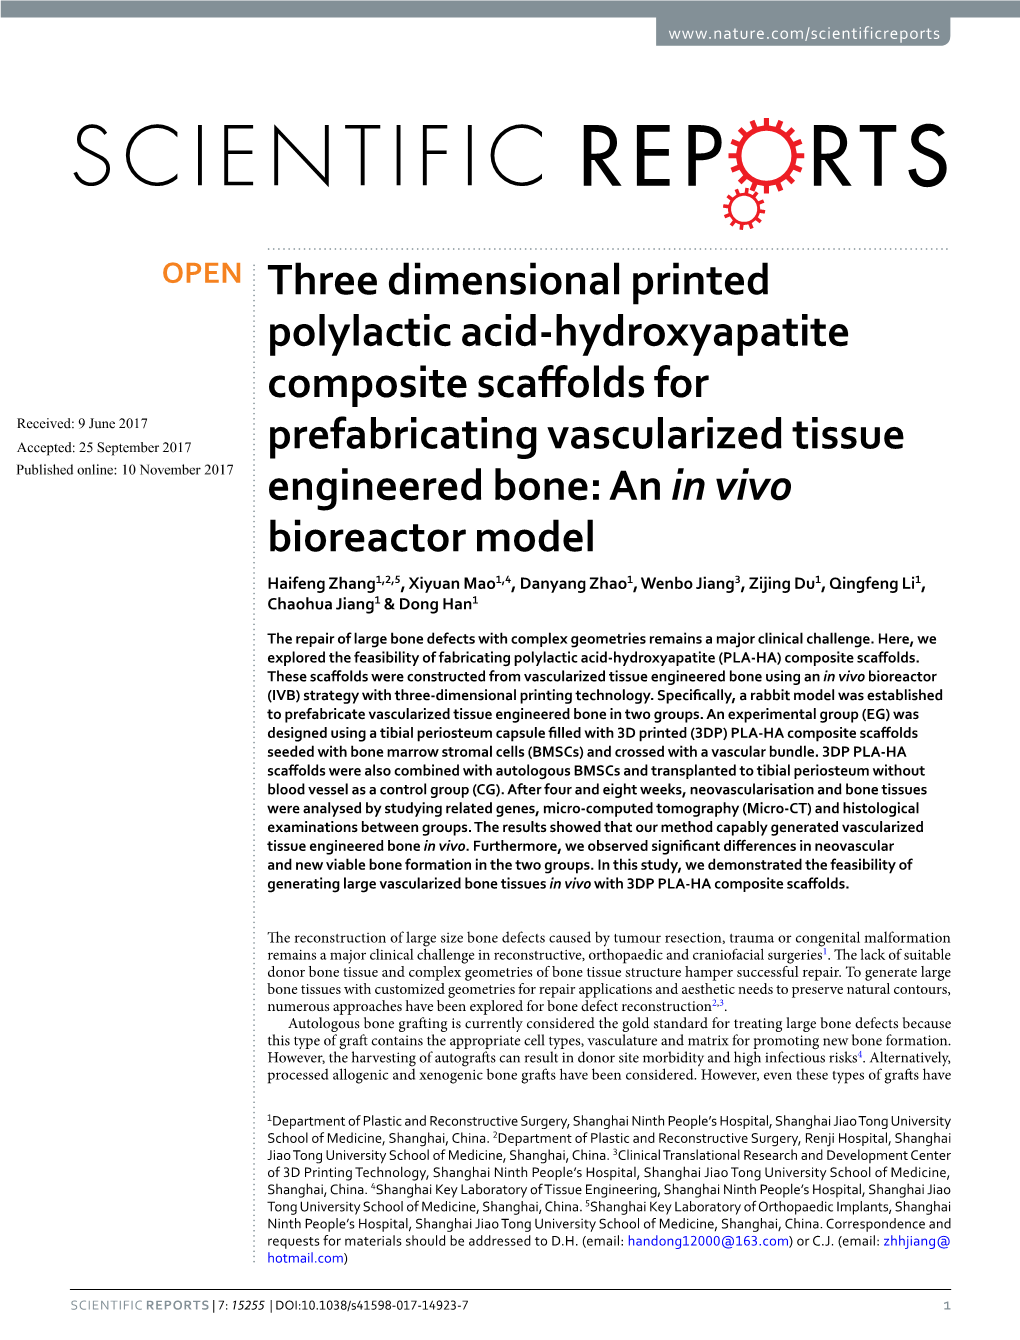 Three Dimensional Printed Polylactic Acid-Hydroxyapatite Composite